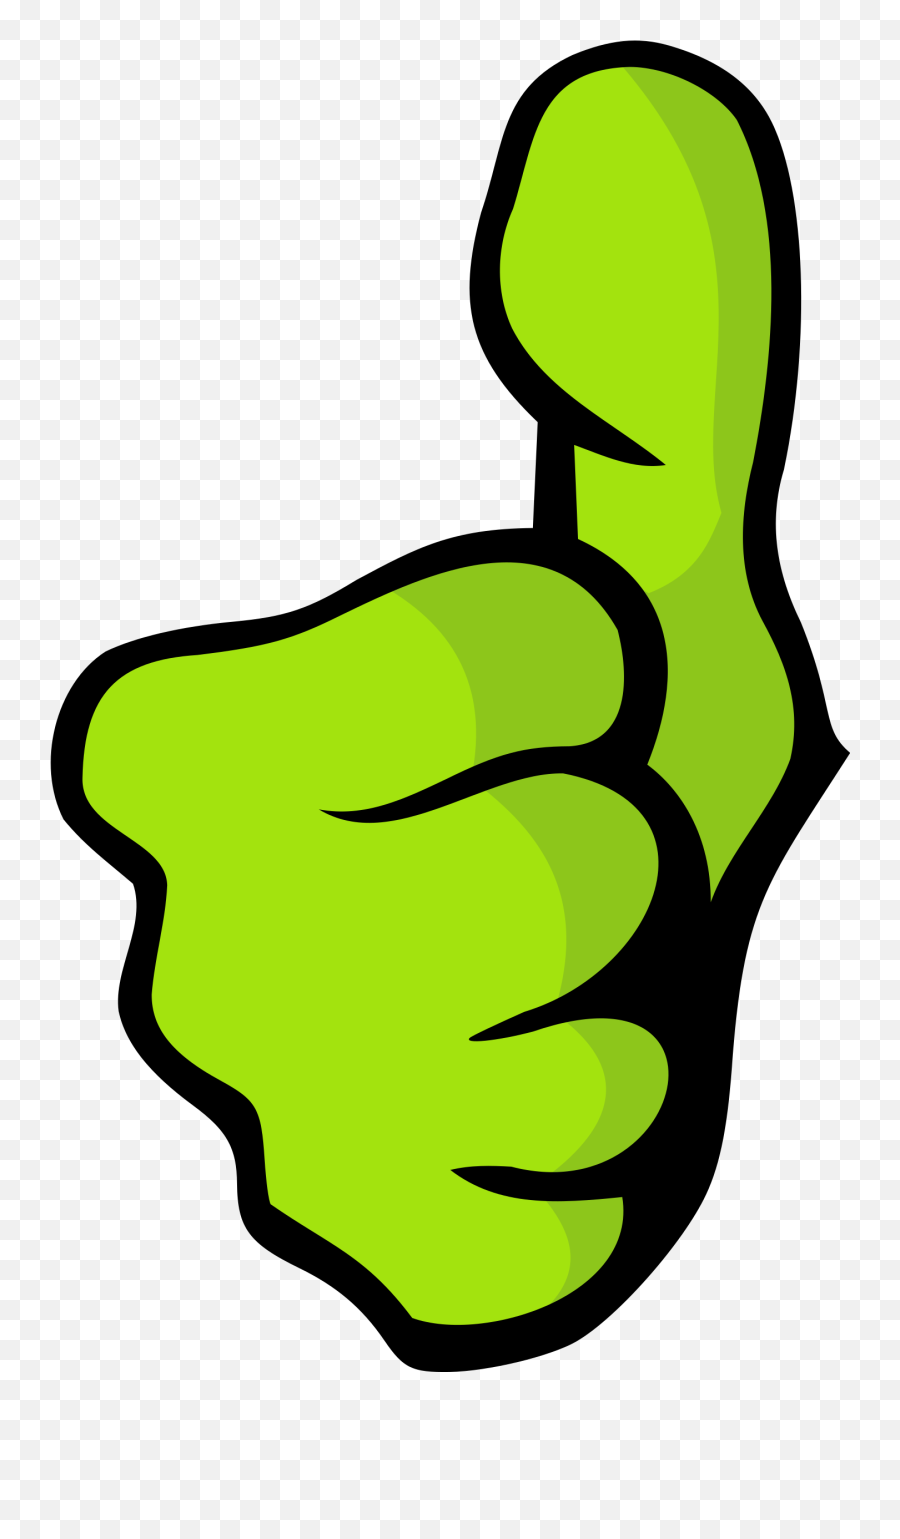 Stock Logo Thumbs Up Png Files - Incredible Hulk Thumbs Up,Thumbs Up Logo